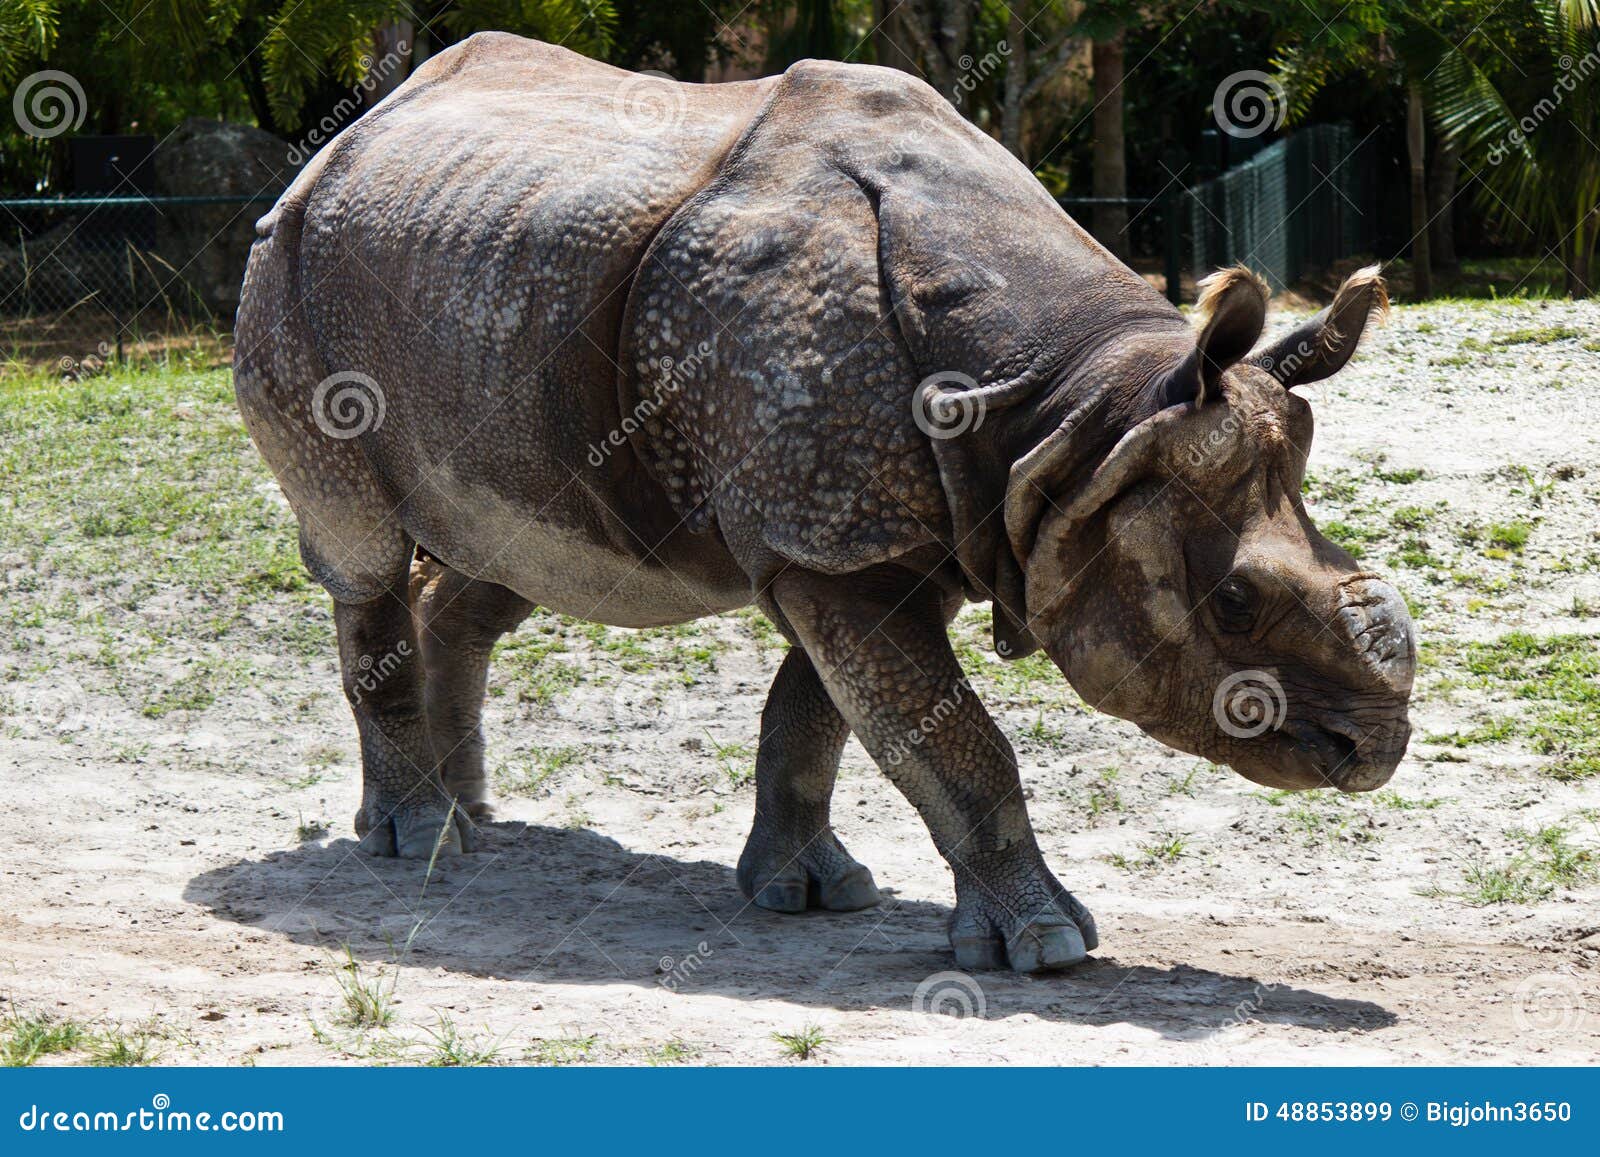 lesser one-horned rhinoceros also known as a javan rhinoceros